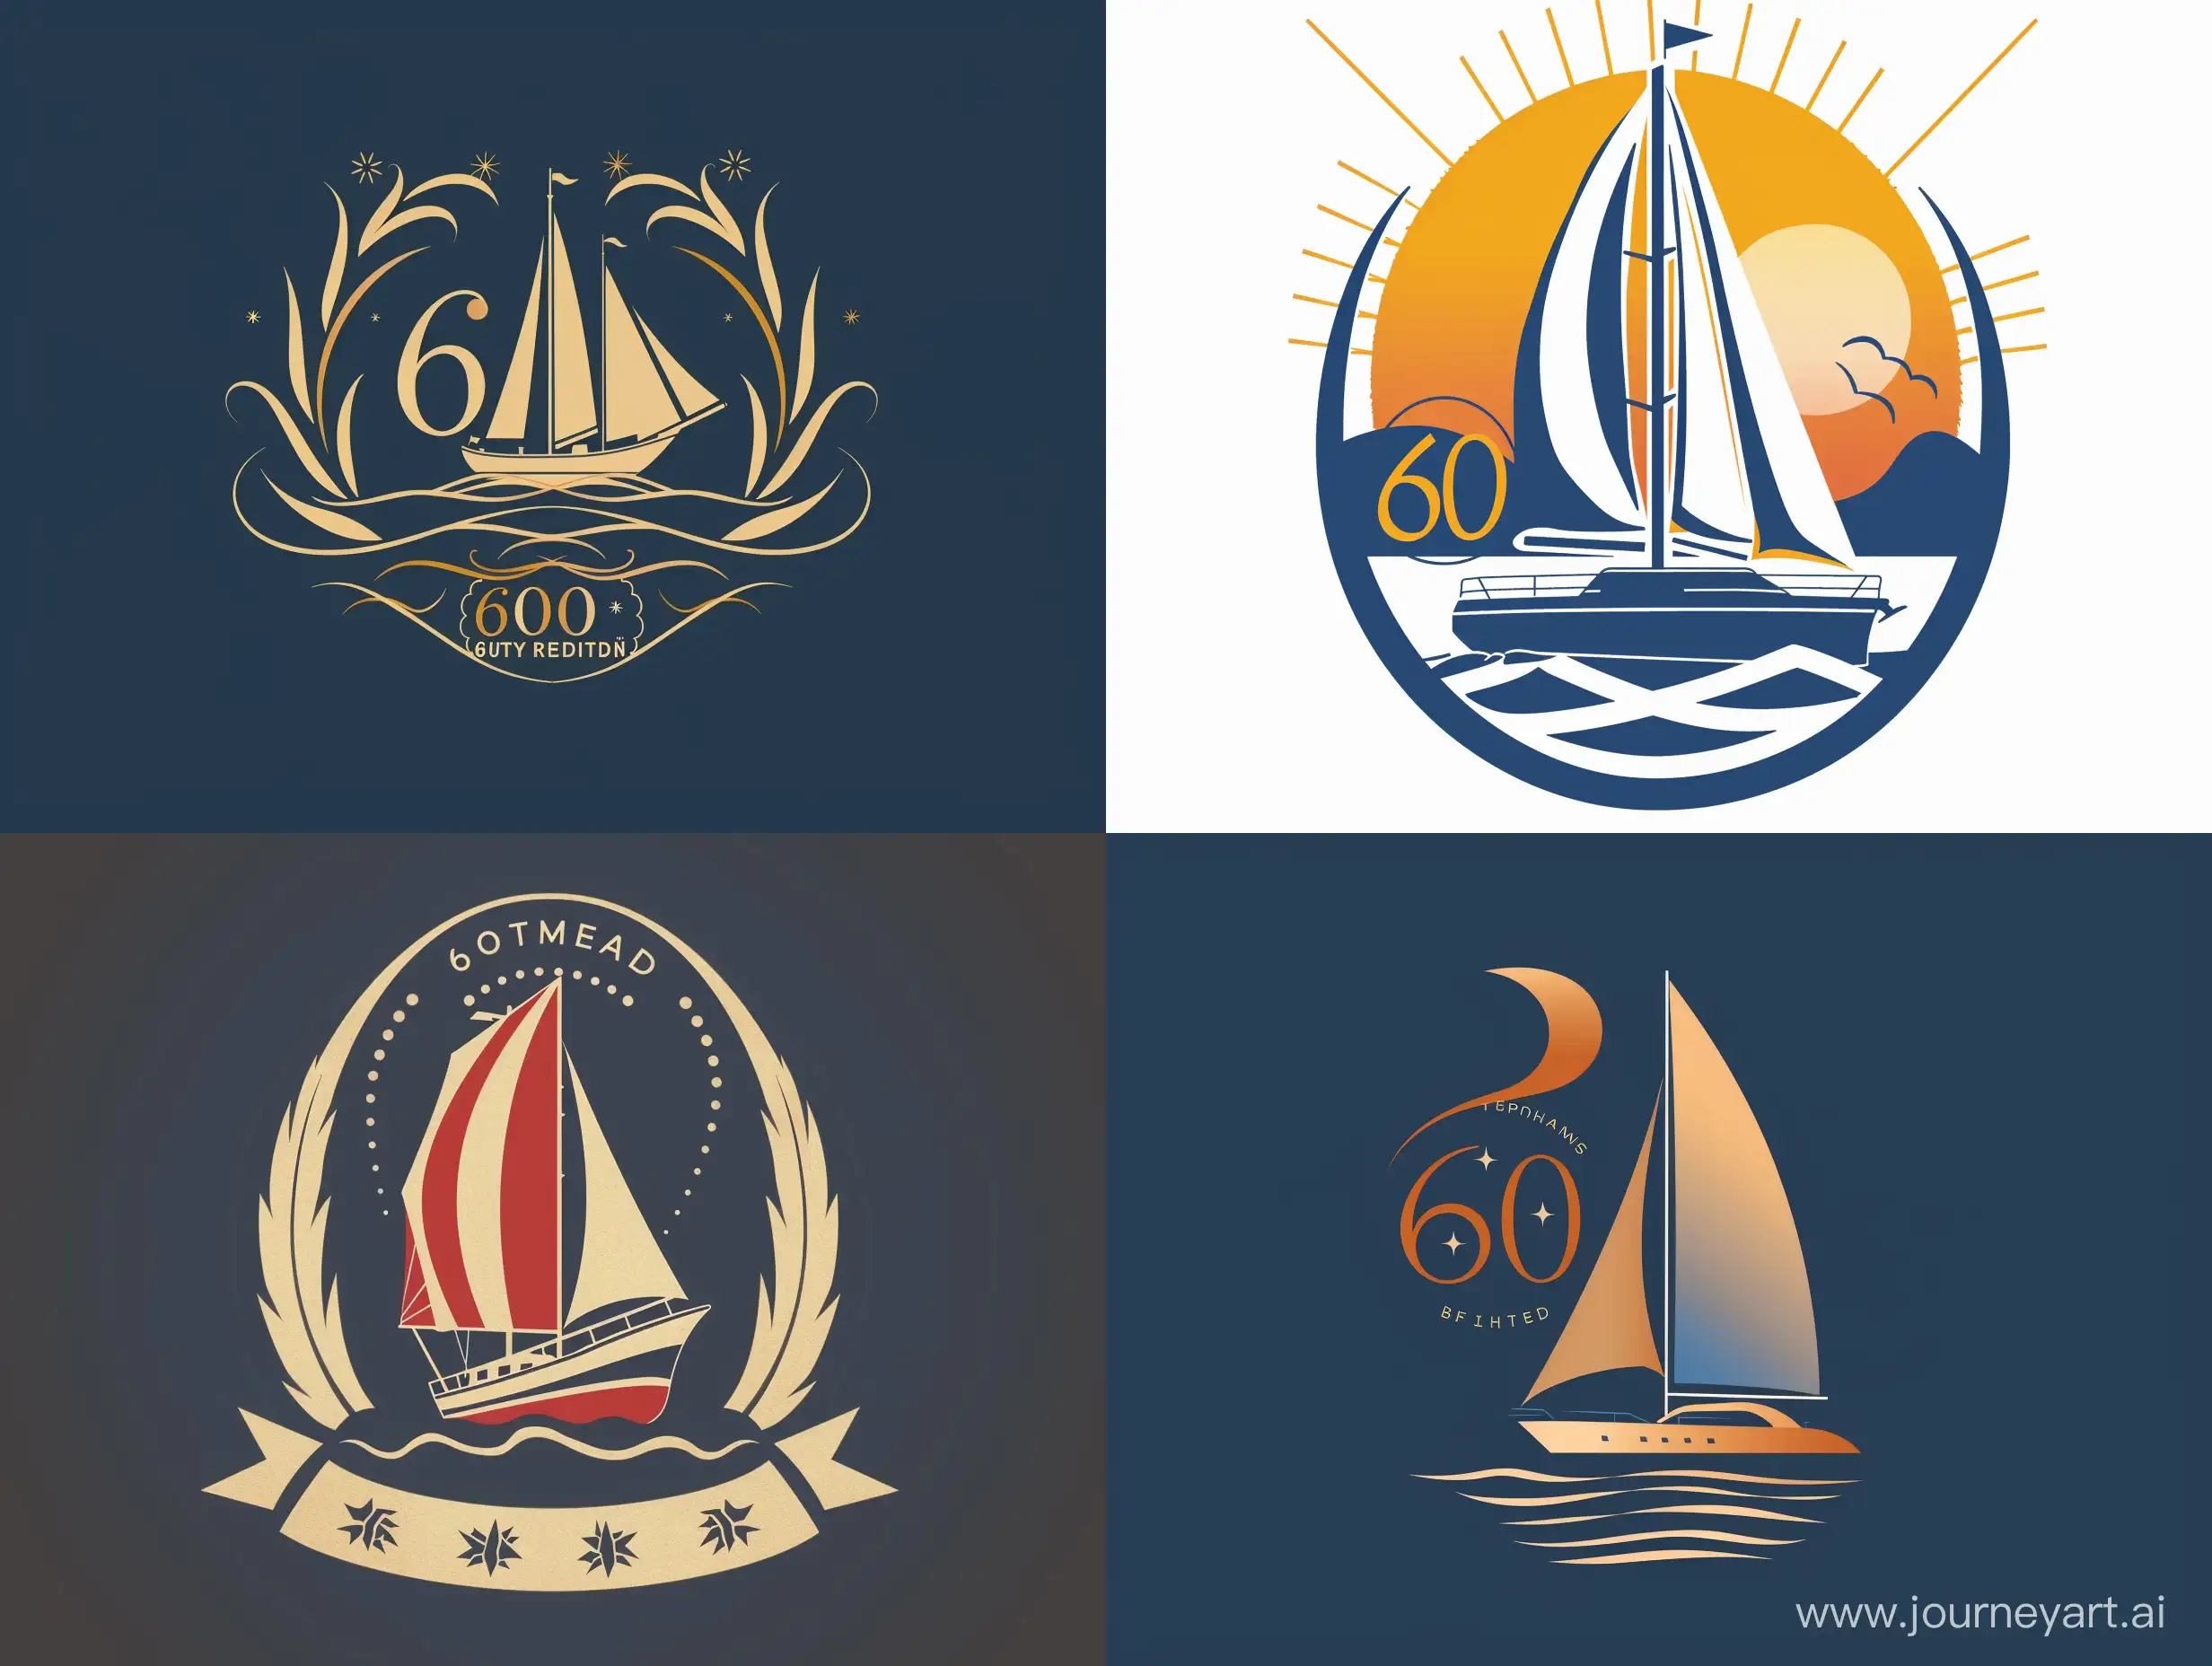 Celebratory-Sailing-Trip-Logo-for-60th-Birthday-Adventure-on-the-Open-Seas